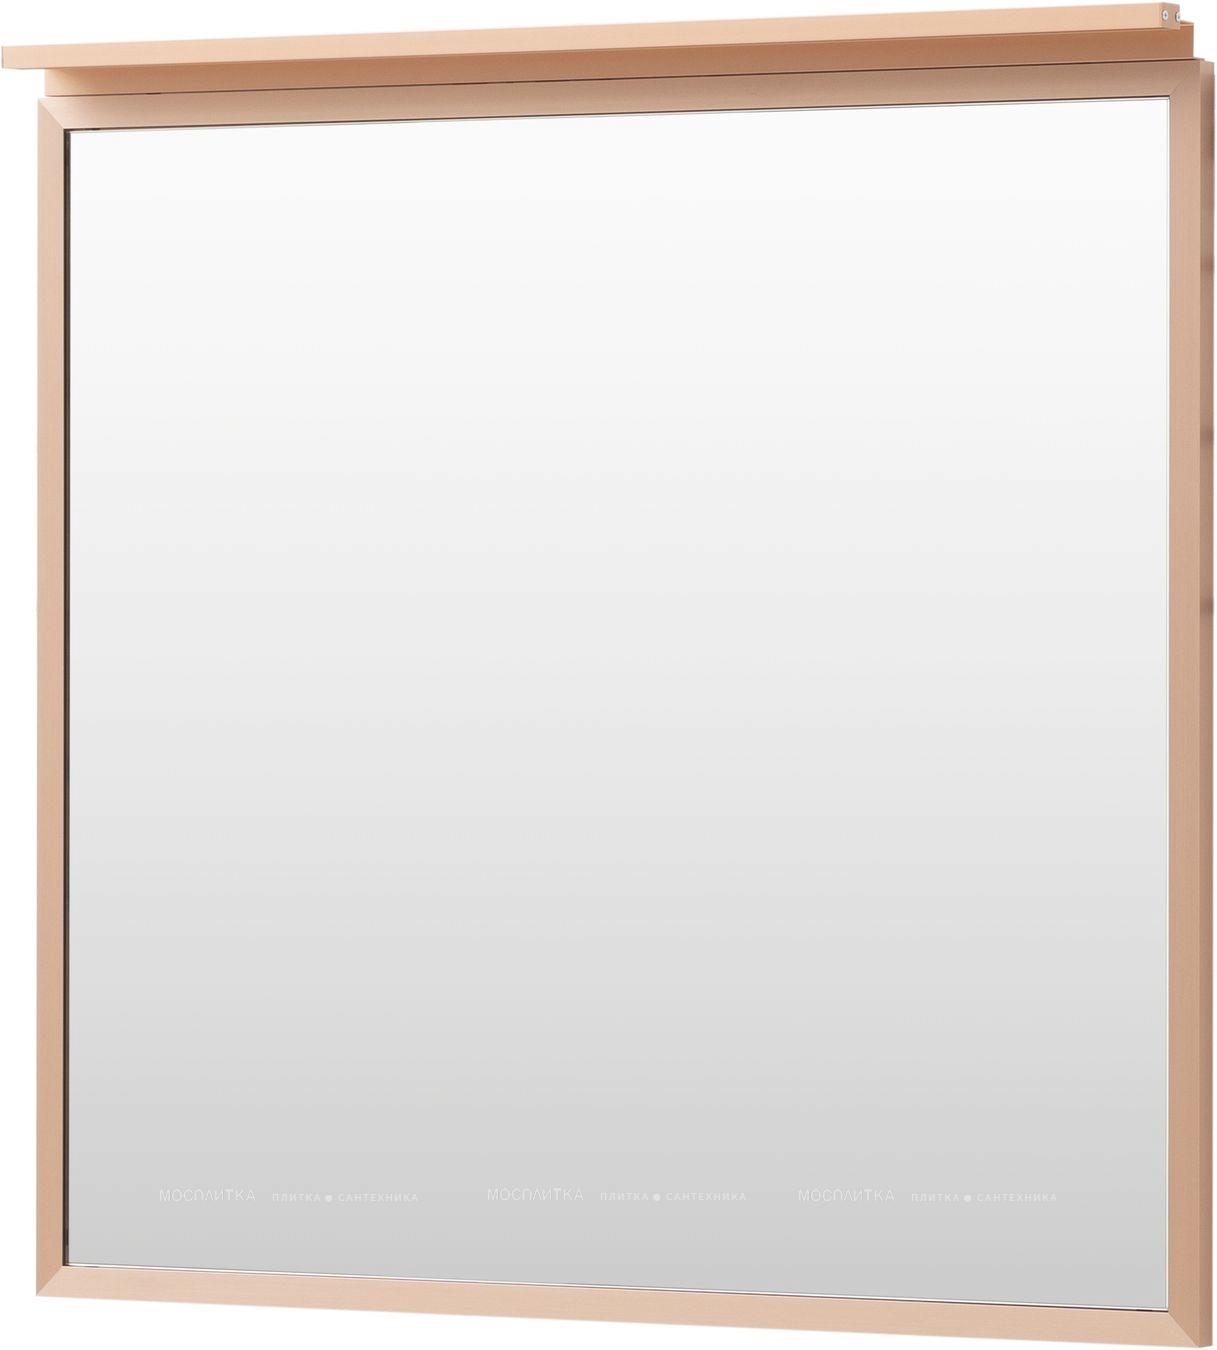 Зеркало Allen Brau Priority 1.31015.60 80 медь браш - изображение 3